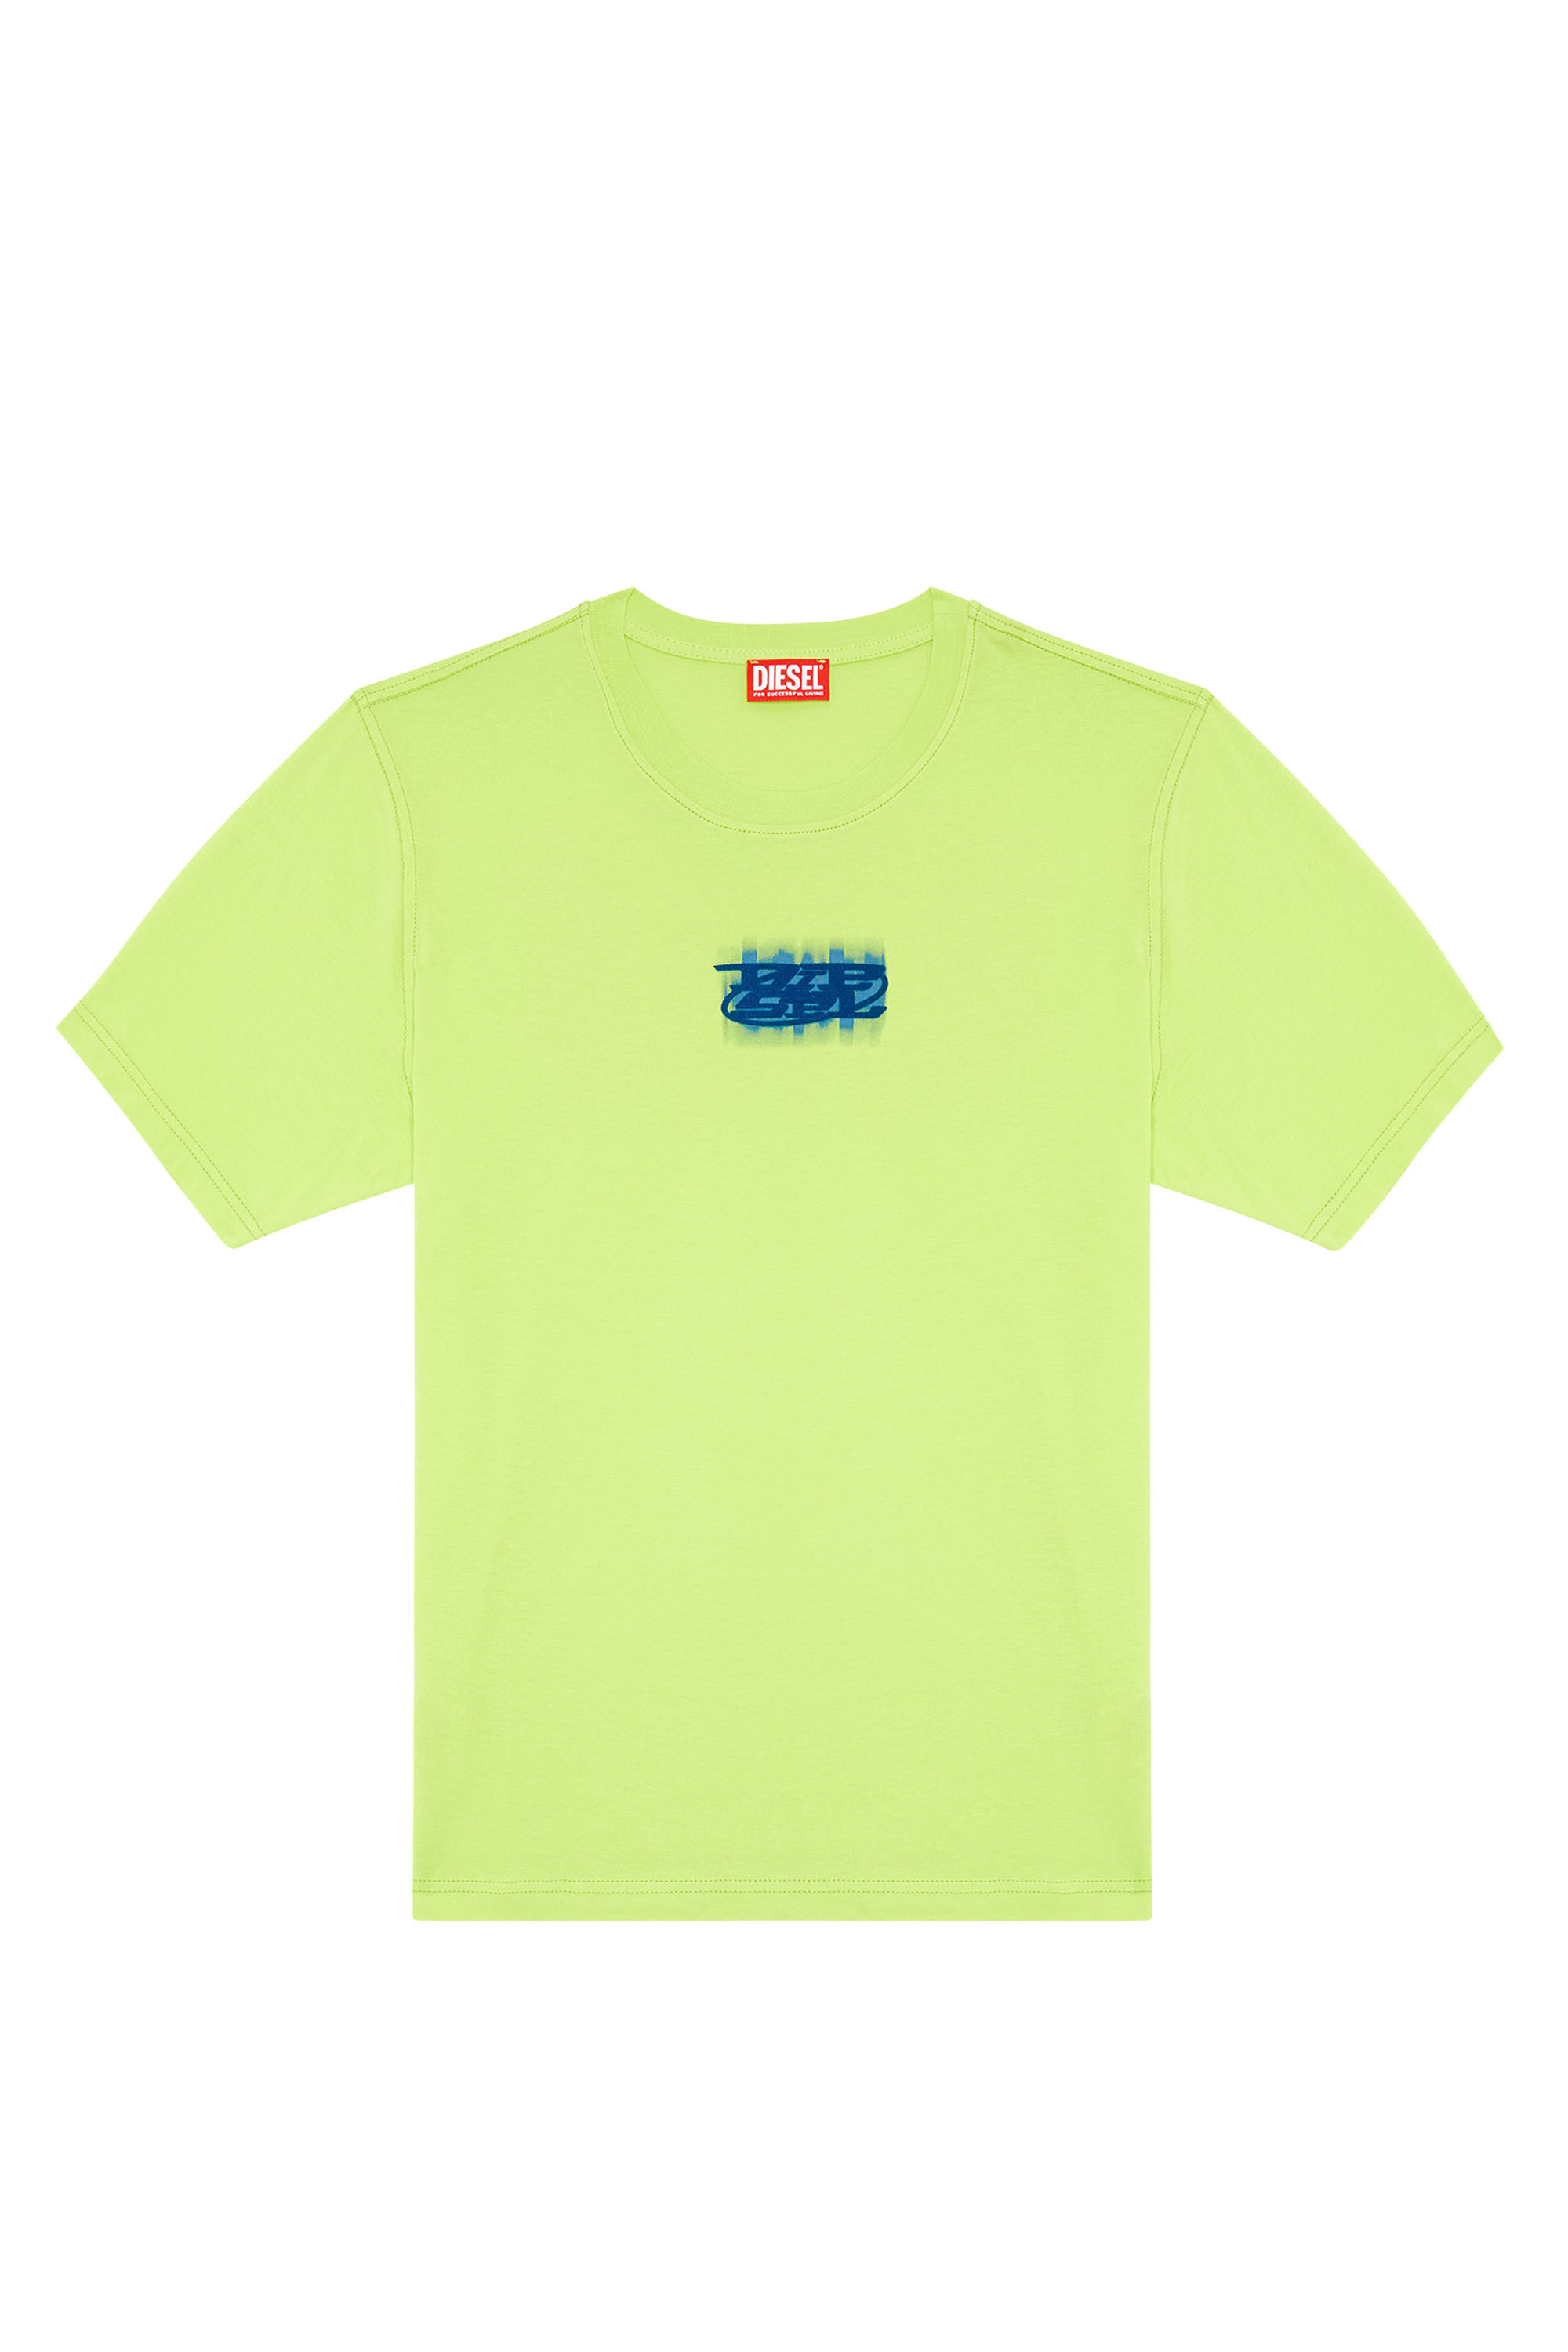 Diesel - T-JUST-N4, Man Logo-flocked T-shirt in organic cotton in Green - Image 2